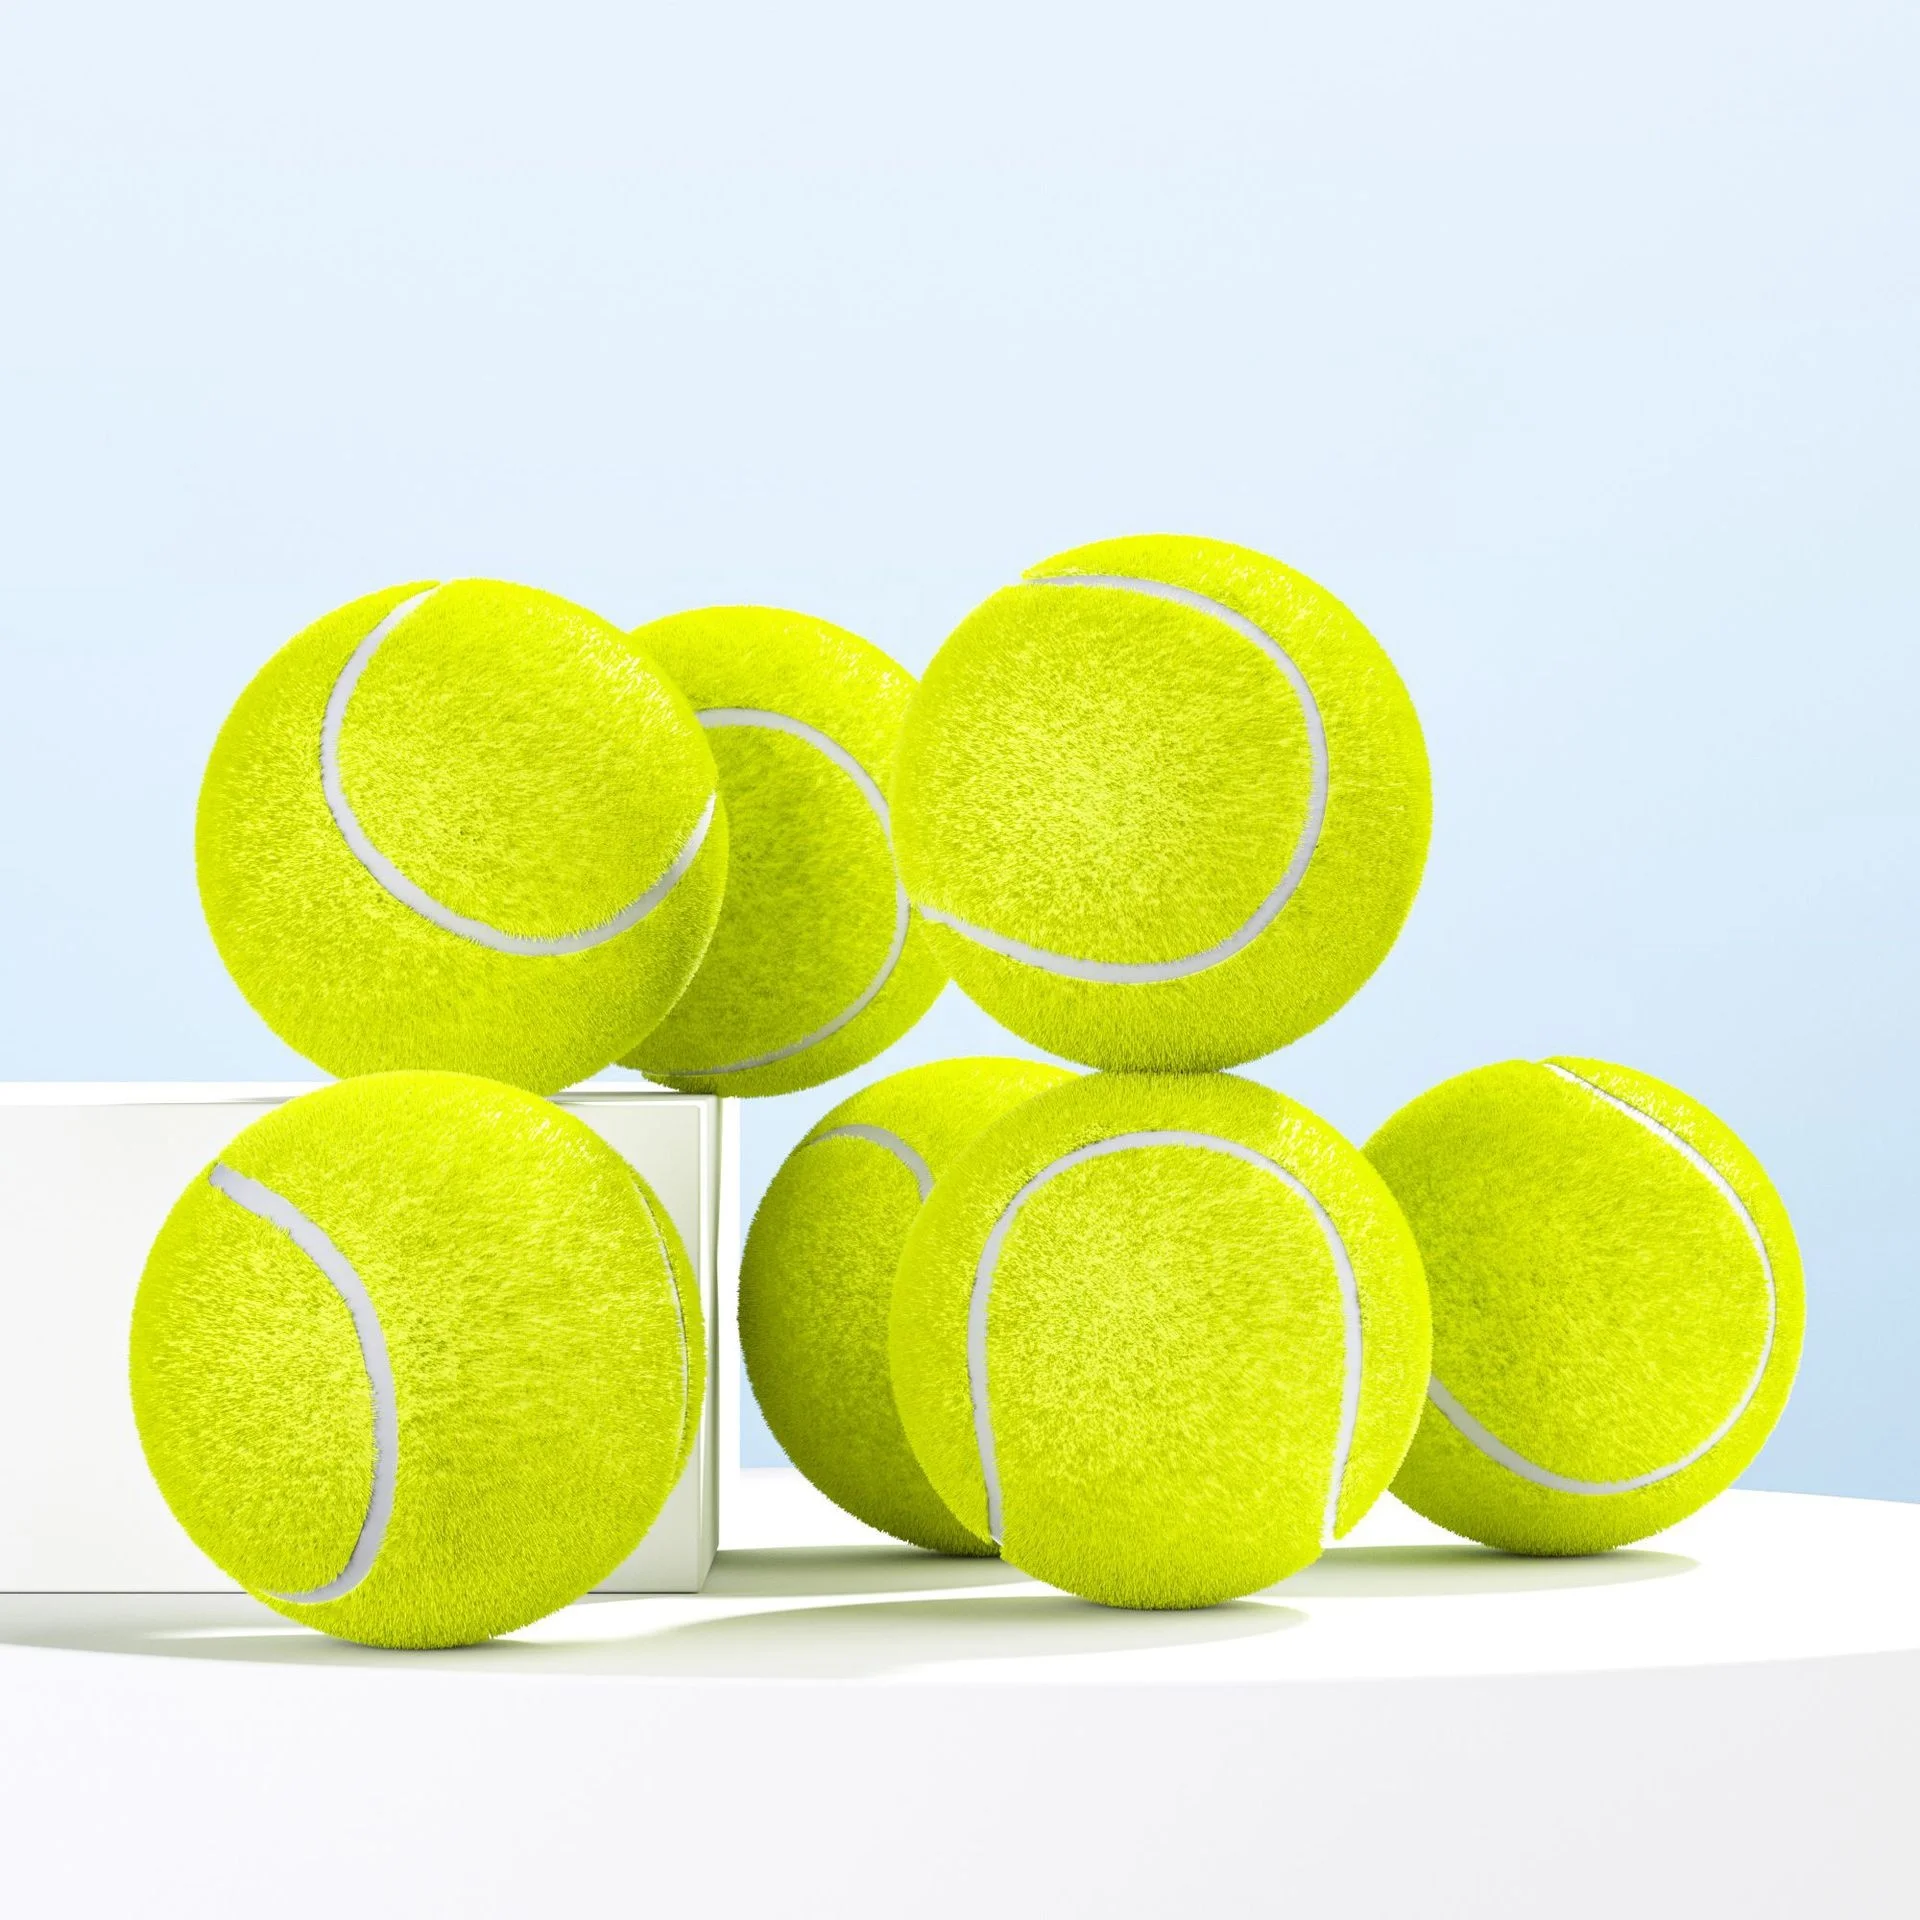 Professional training bulk tennis practice high elastic resistance to play wool fiber rubber